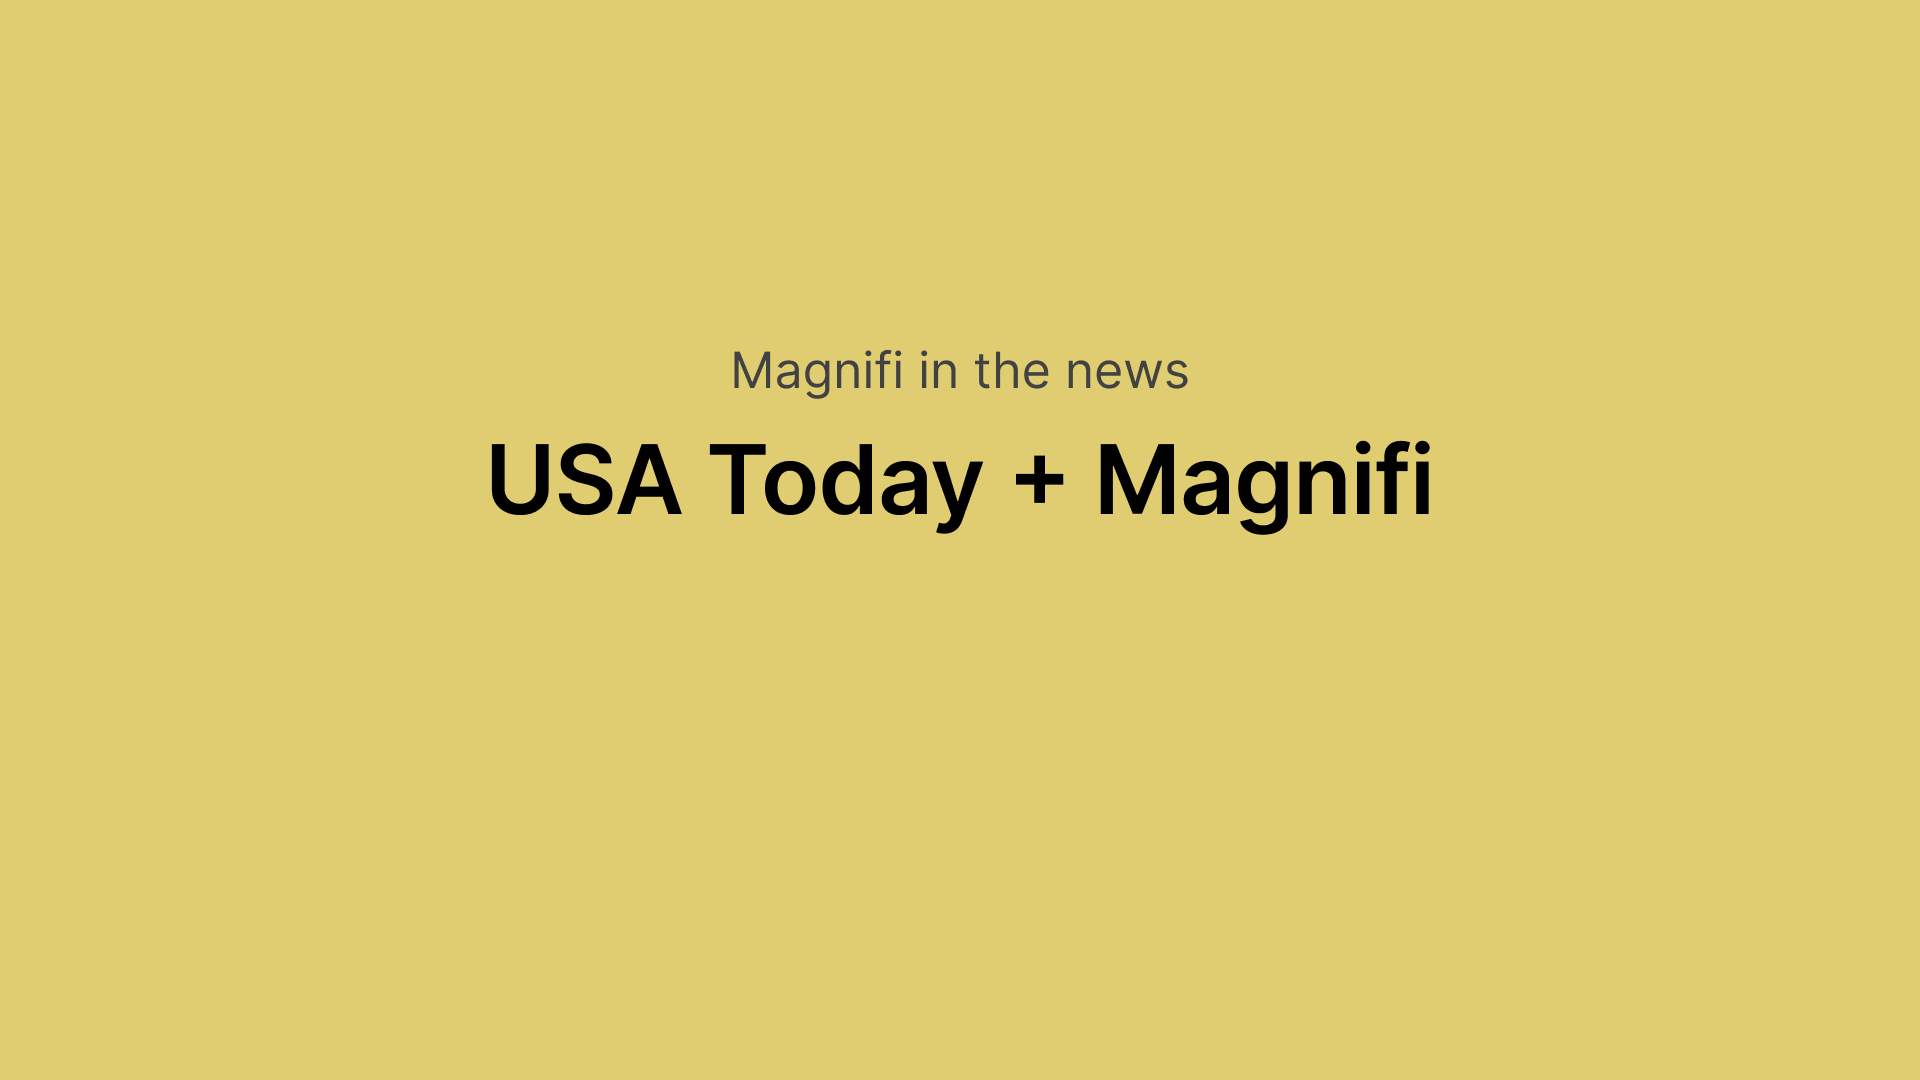 Magnifi in the news
USA Today + Magnifi